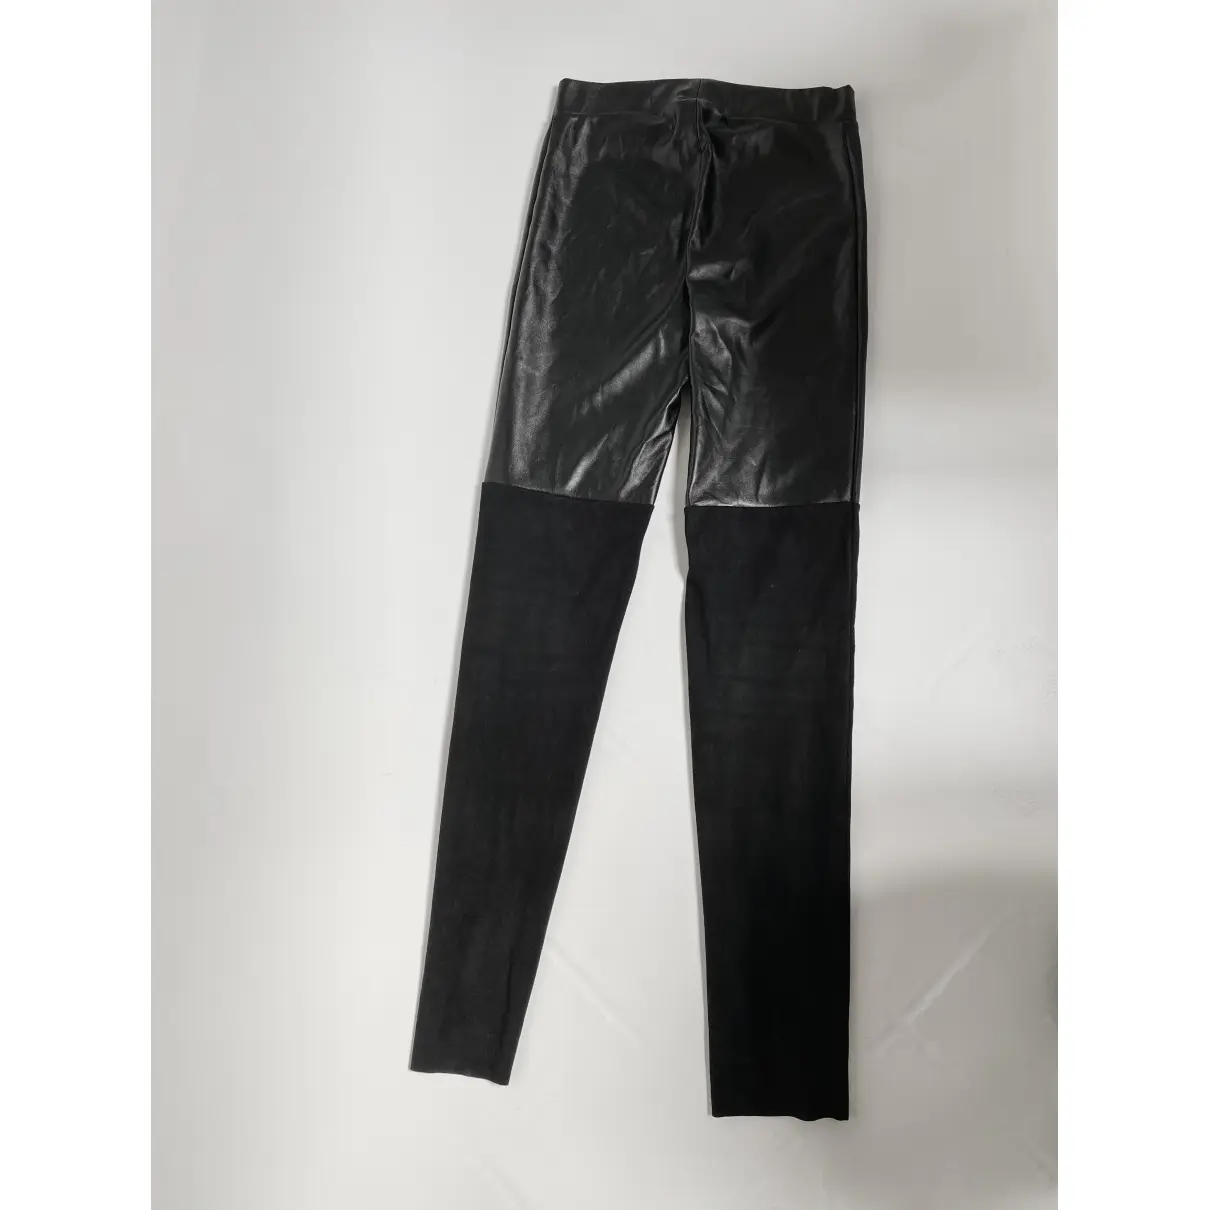 Buy Wolford Black Suede Trousers online